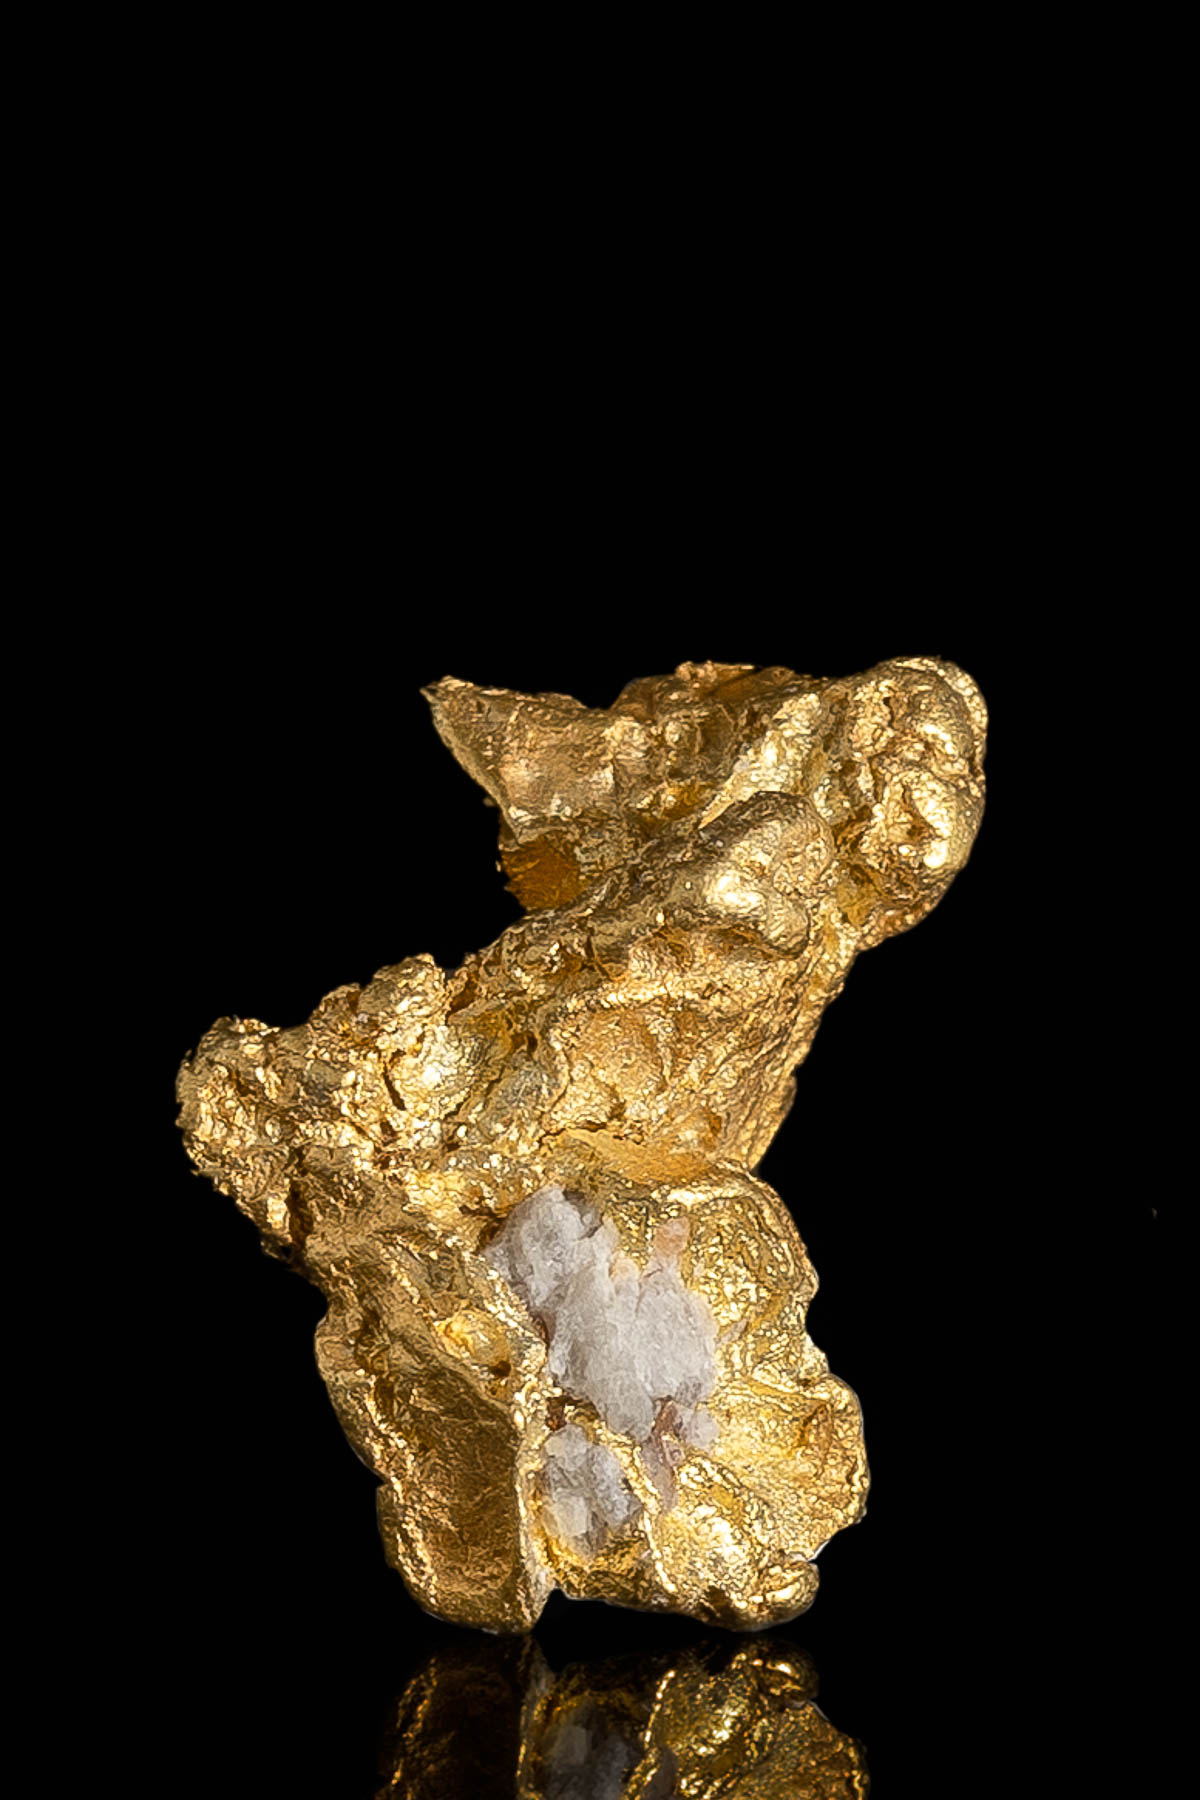 Sharp Zig Zag Gold Nugget from the Yukon